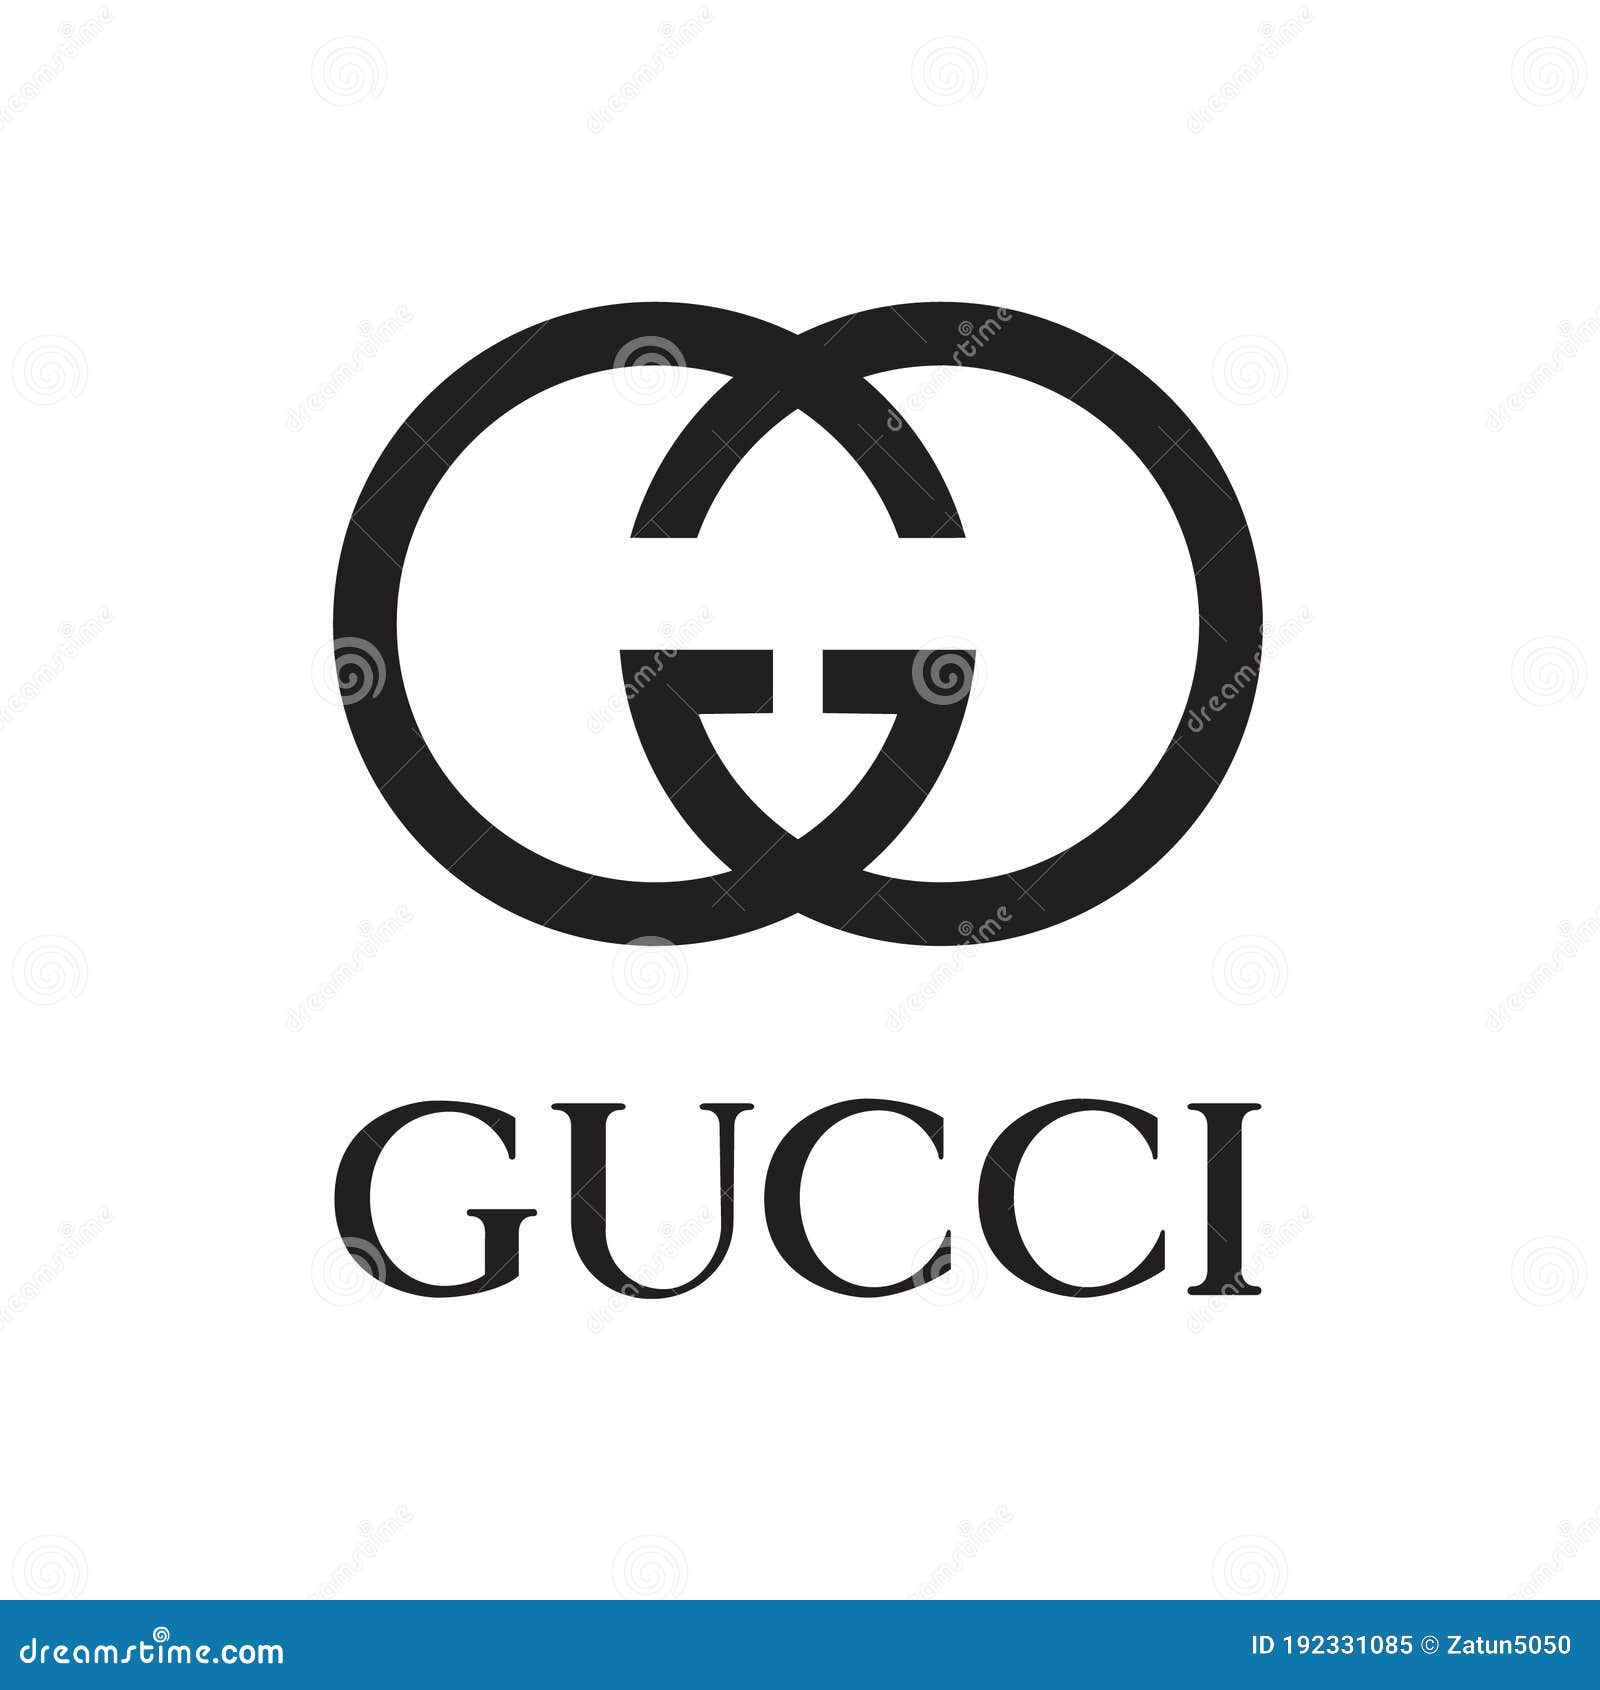 Gucci Fashion Brand Vector Logo Editorial Image - Illustration of ...